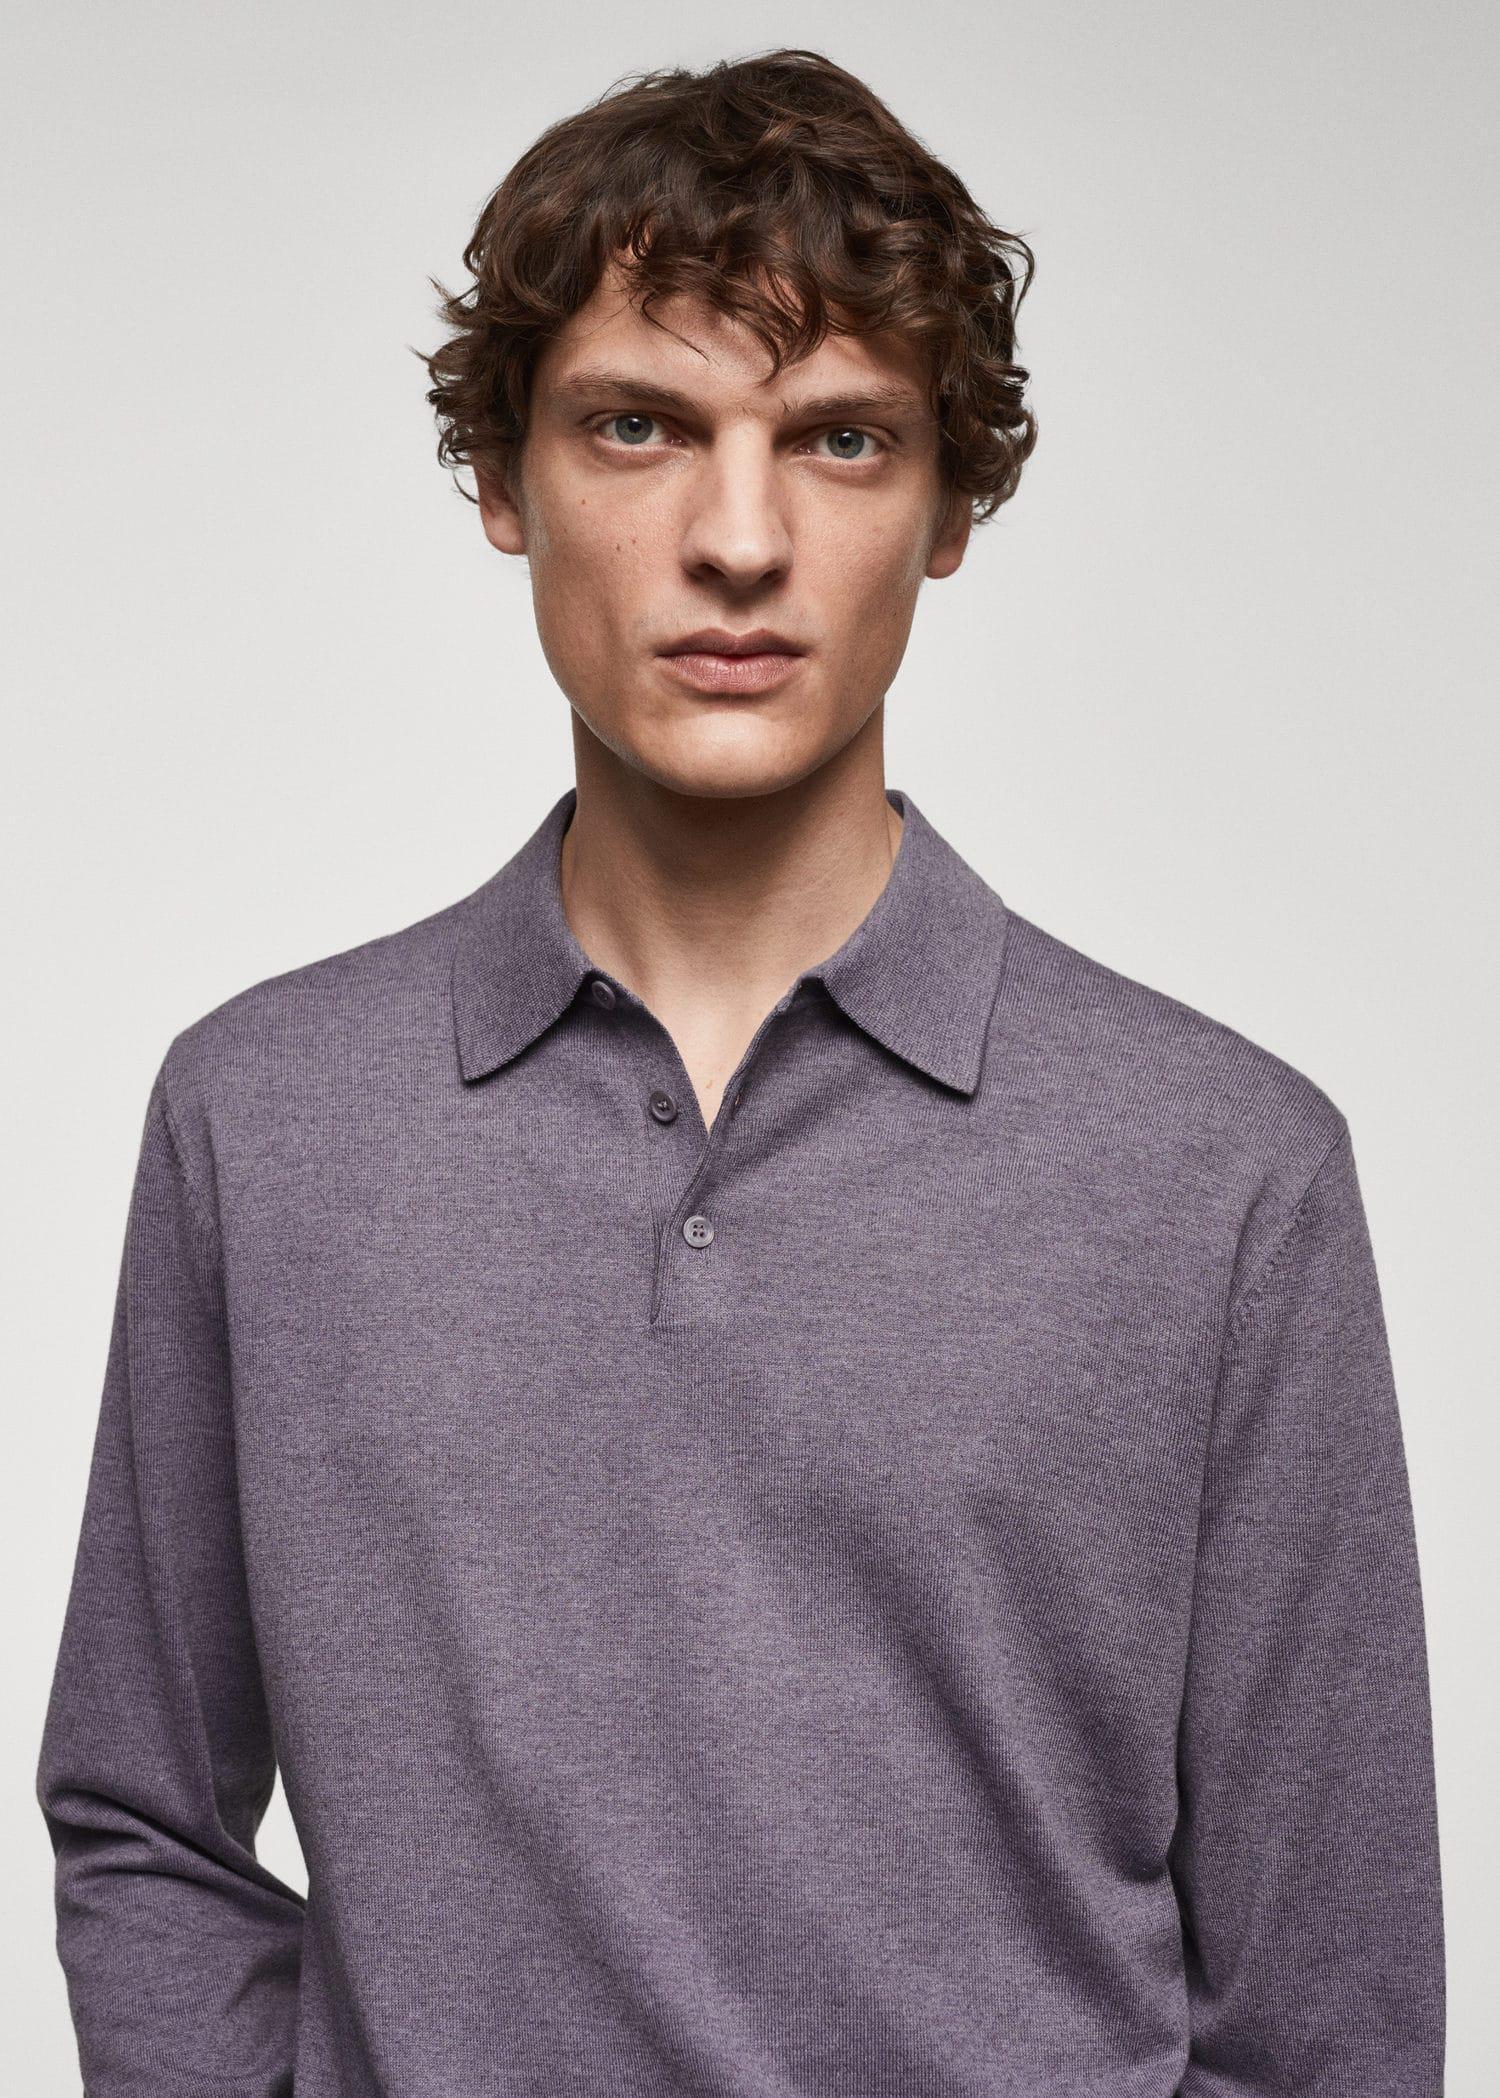 Mango - Purple Cotton Jersey Polo Shirt